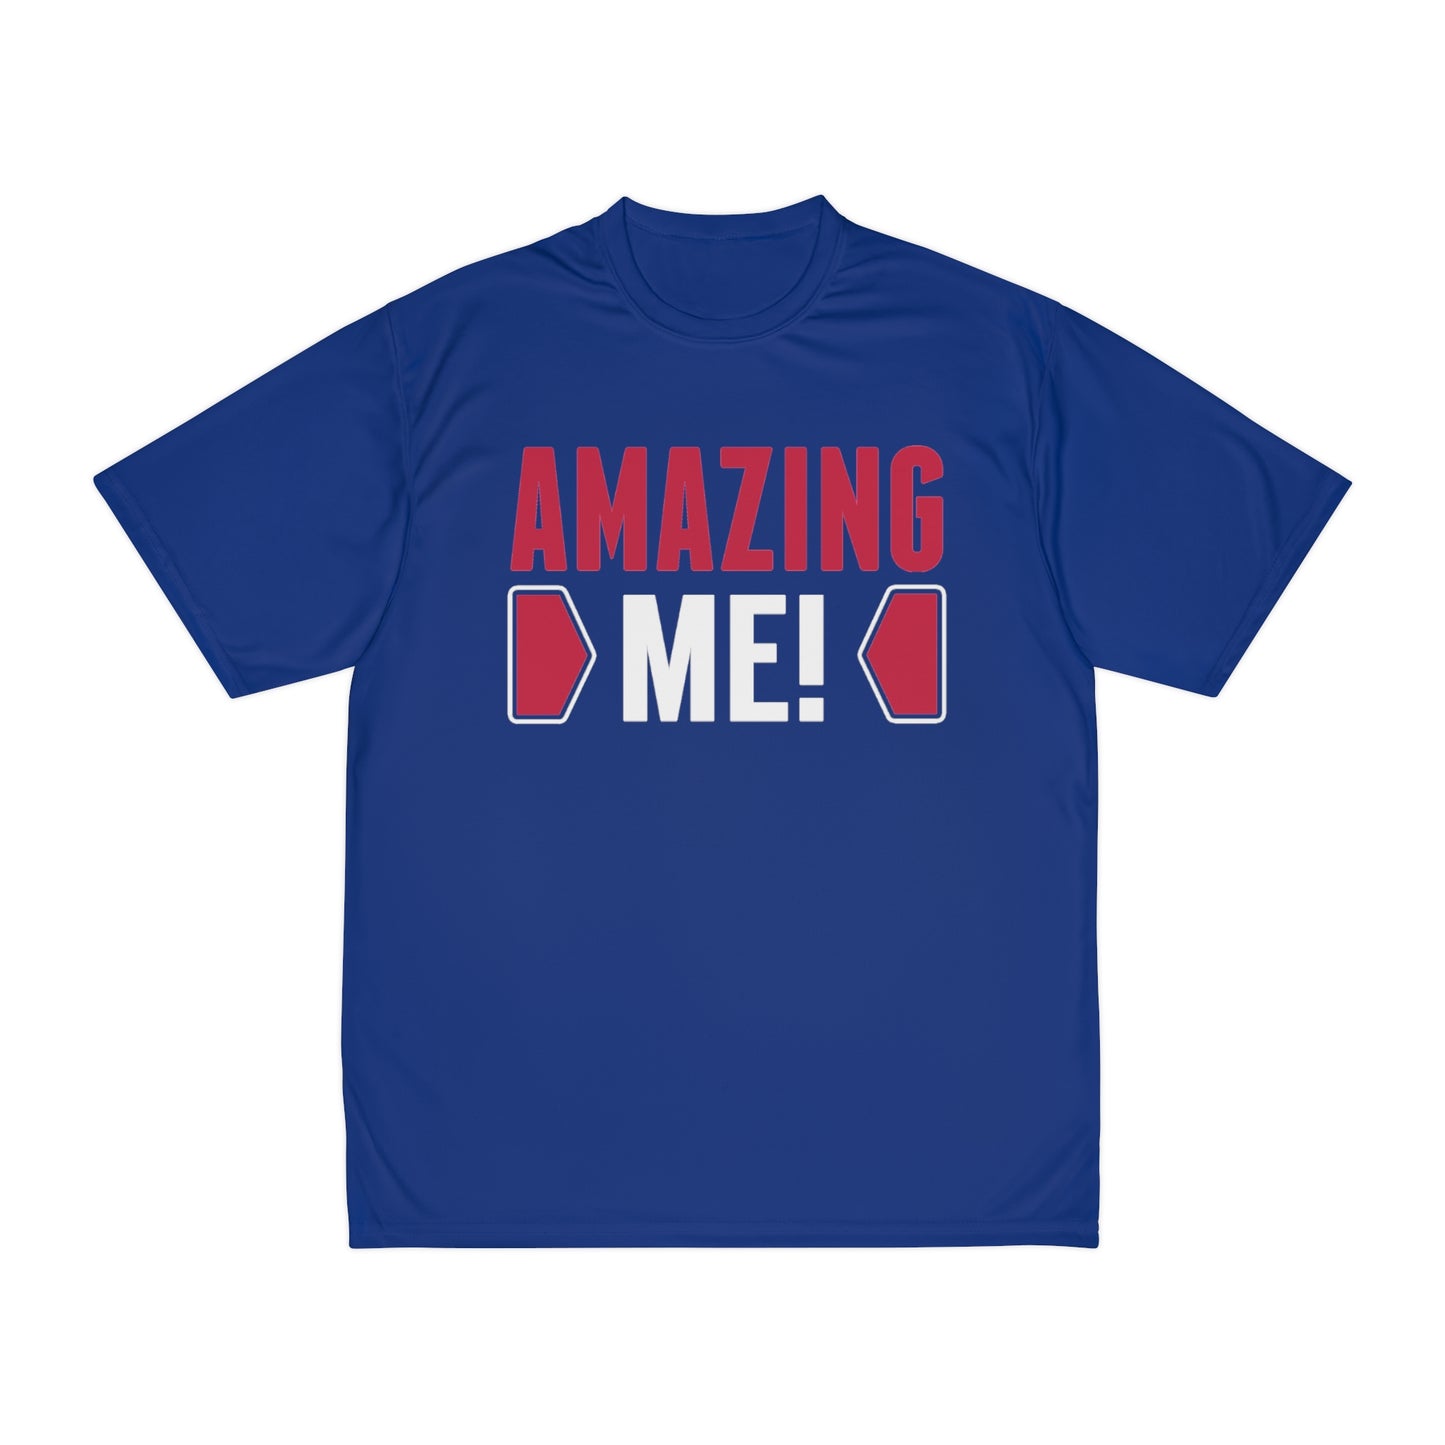 Amazing Me Men's Performance T-Shirt, Amazing shirts, Inspirational shirts, Motivational Shirts, Positive shirts, Trendy tees, Men's Shirt